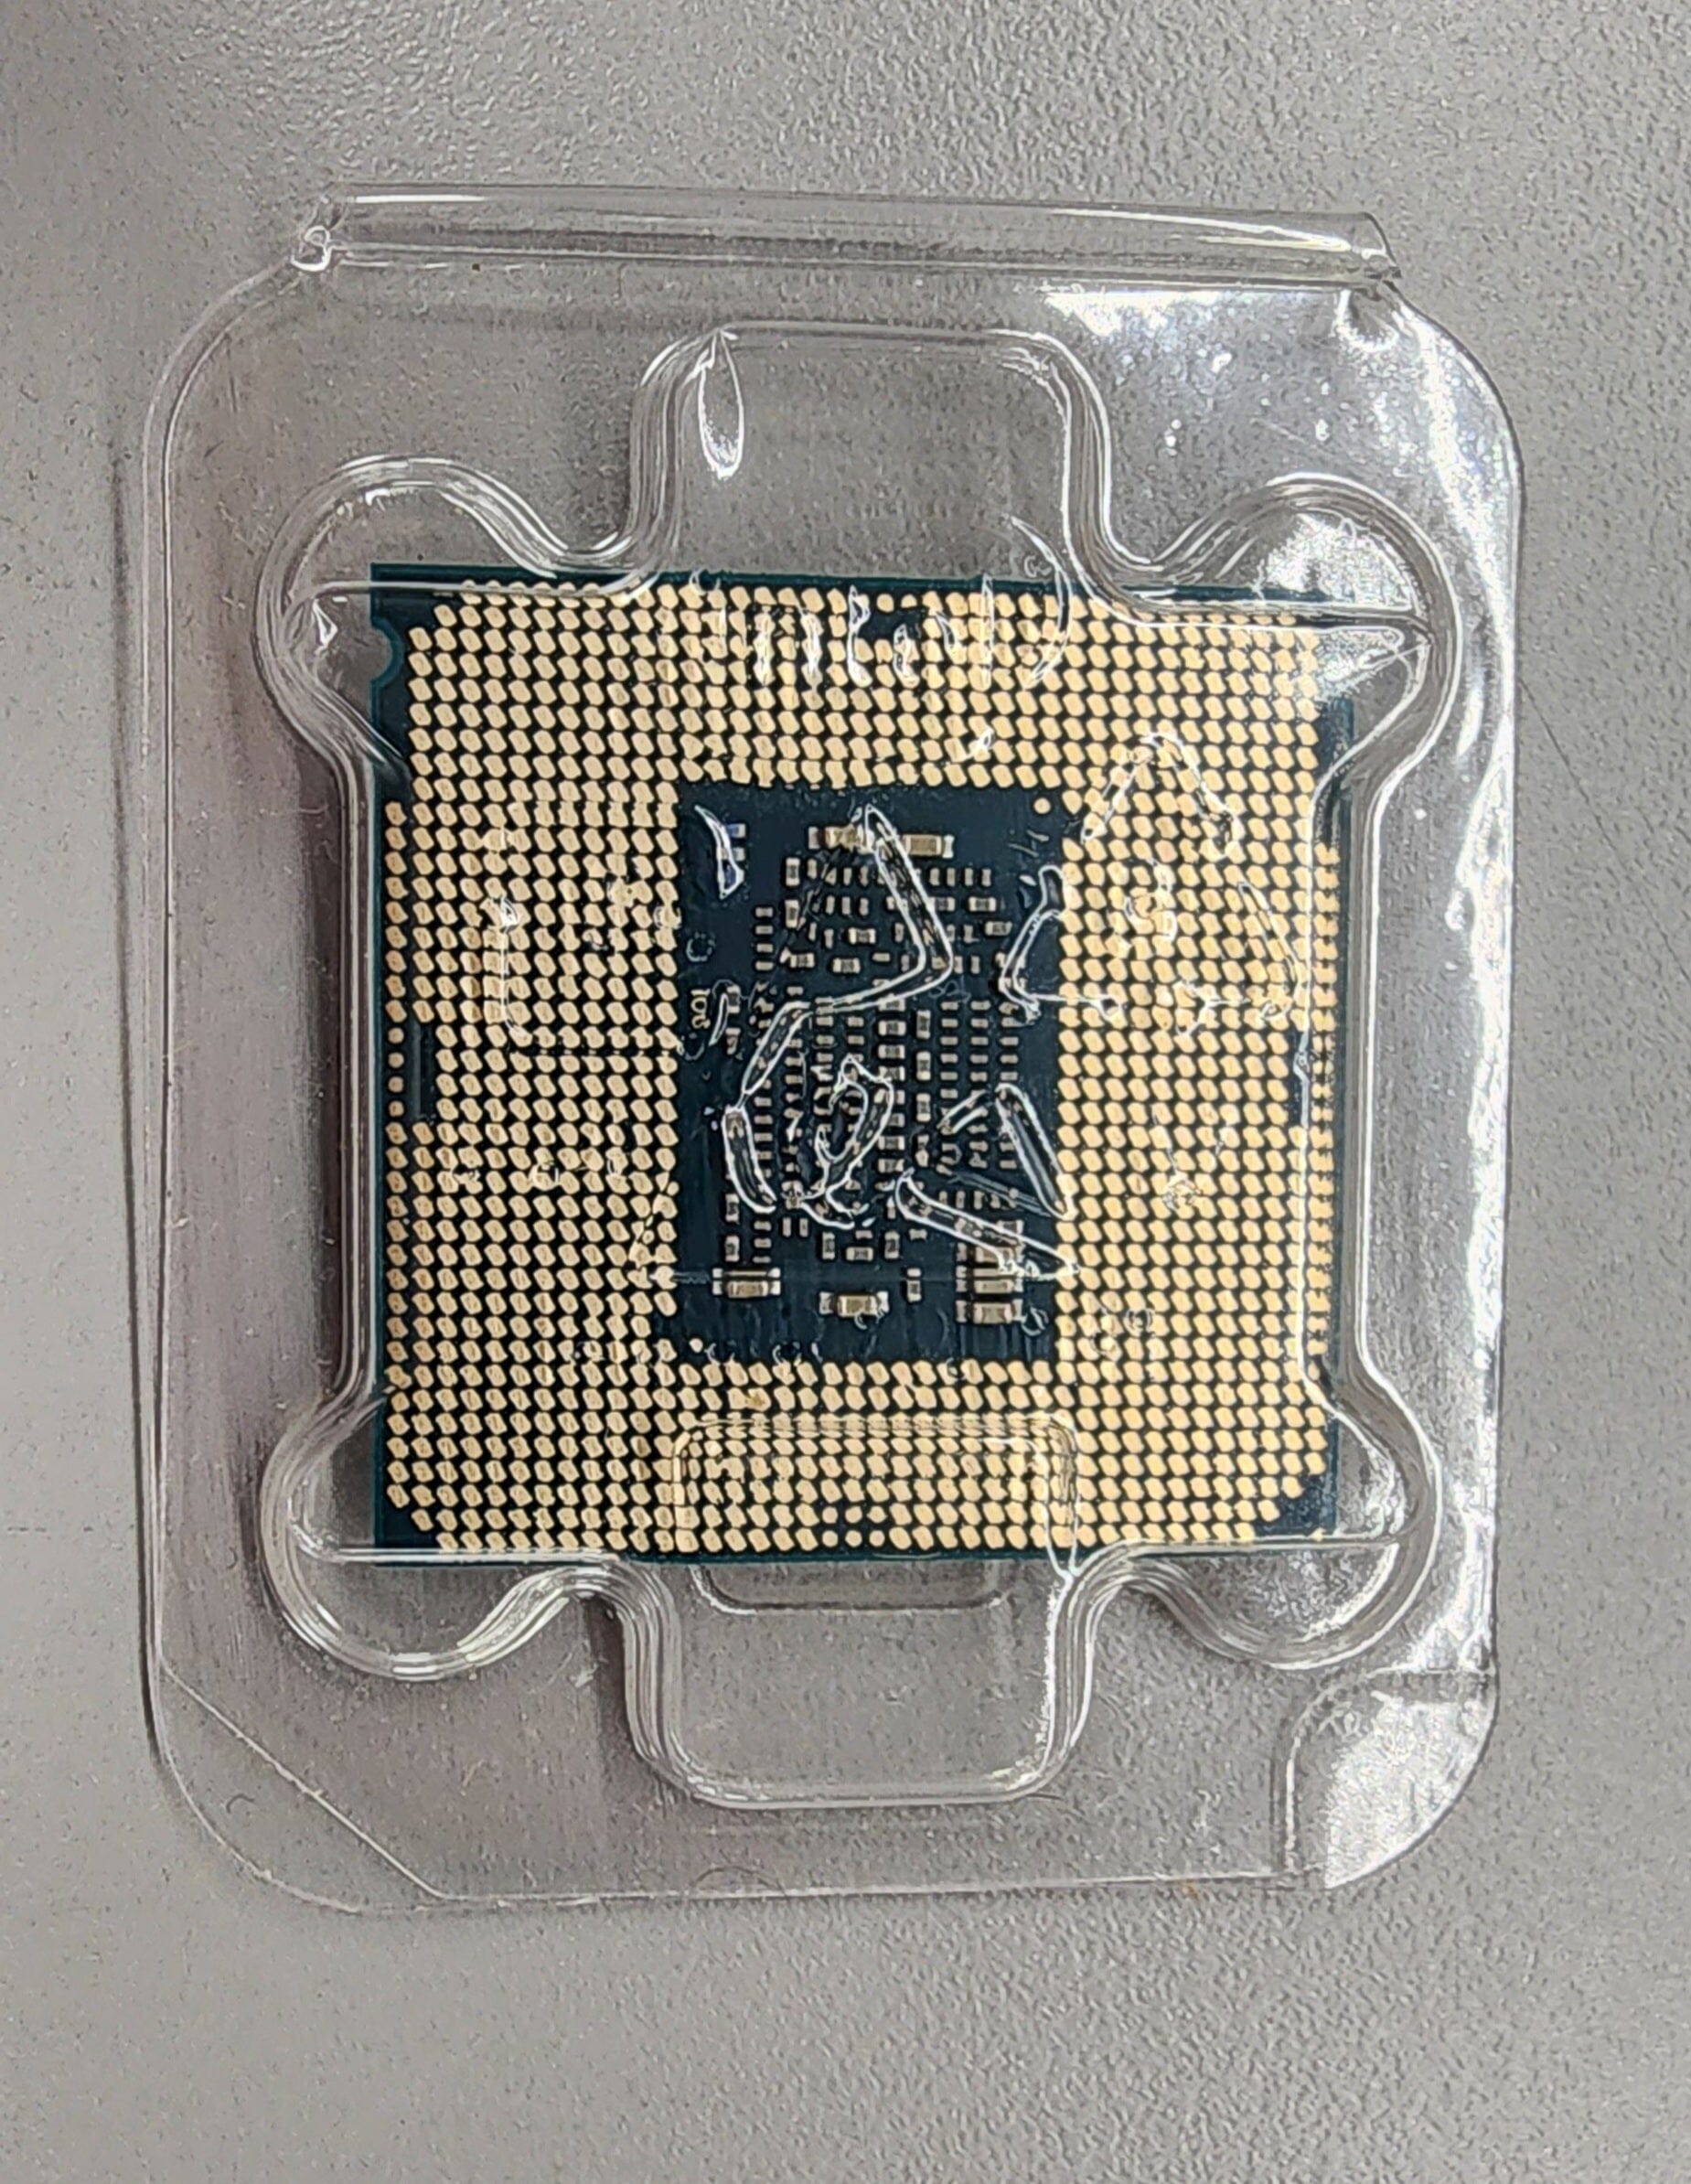 Intel Core i3-8100 4-Core 3.6 GHz 6 MB LGA 1151 CPU Processor - USED Working CPU Processor Intel 